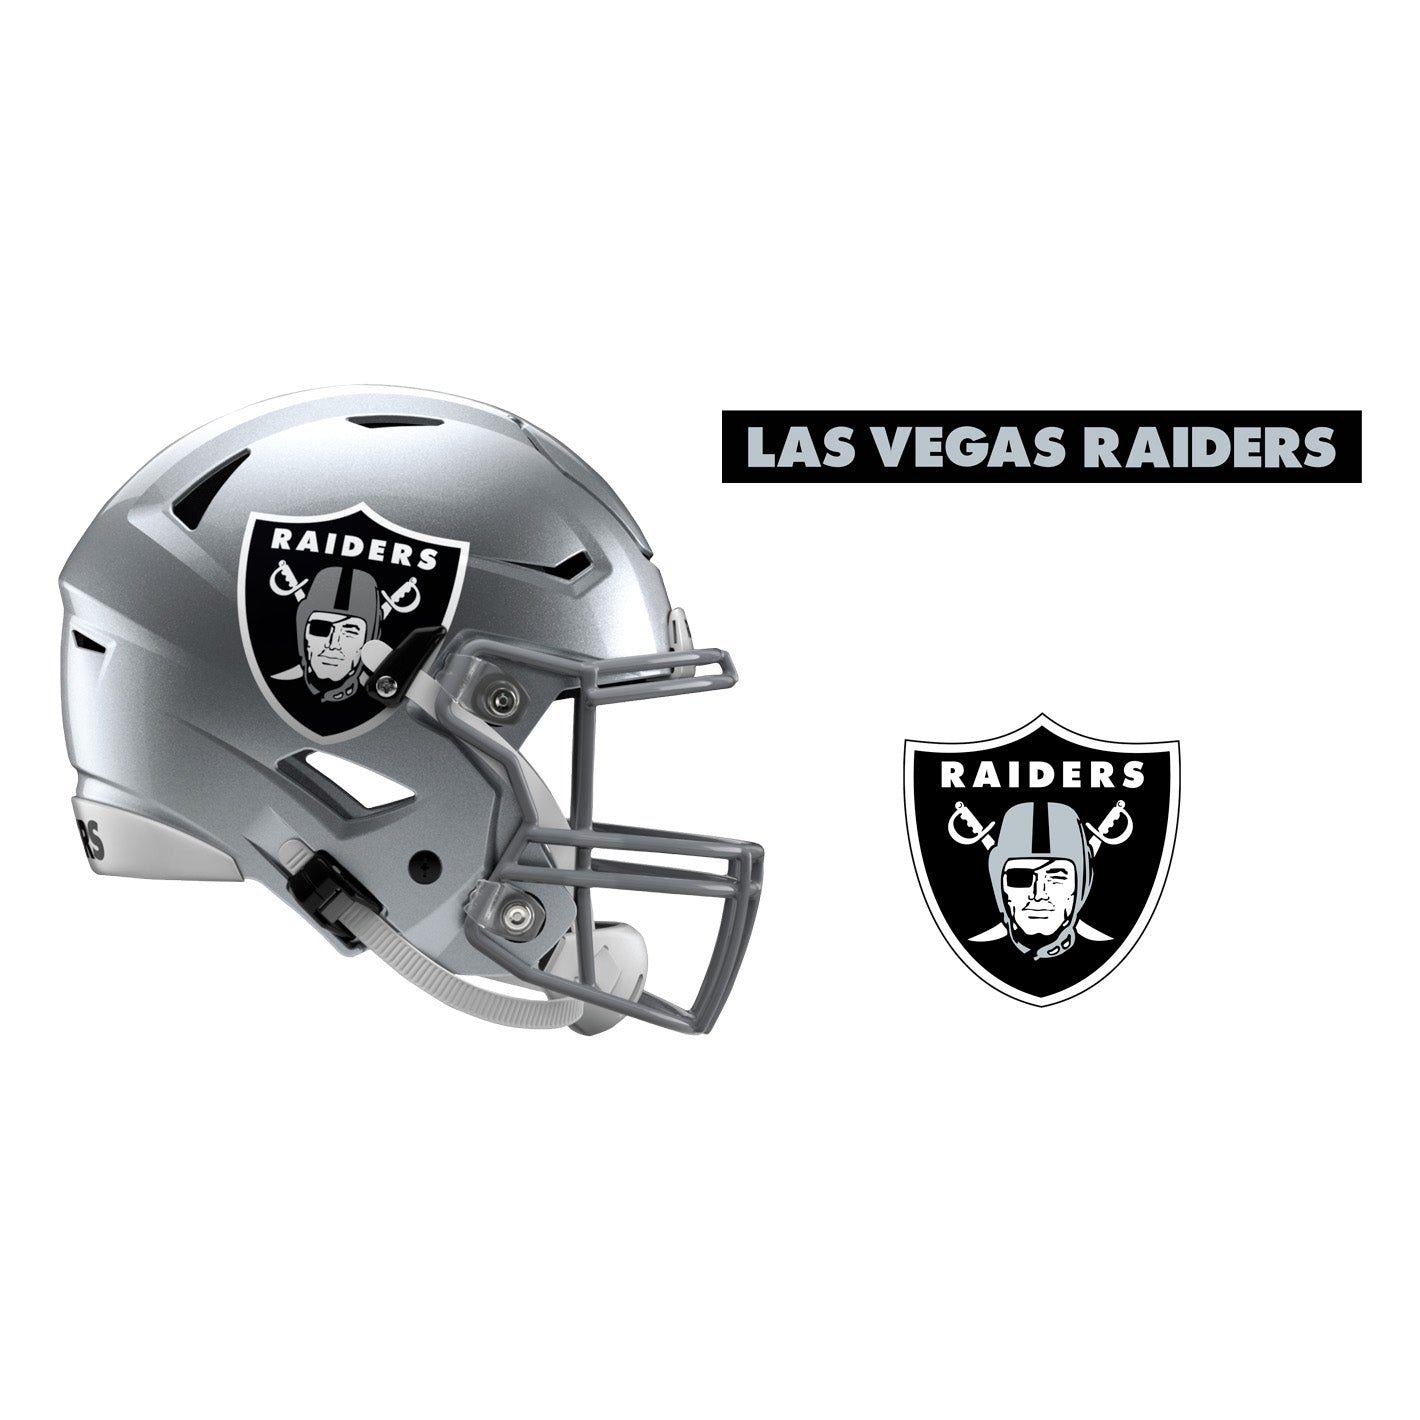 Las Vegas Raiders: 2022 Helmet - Officially Licensed NFL Removable Adh